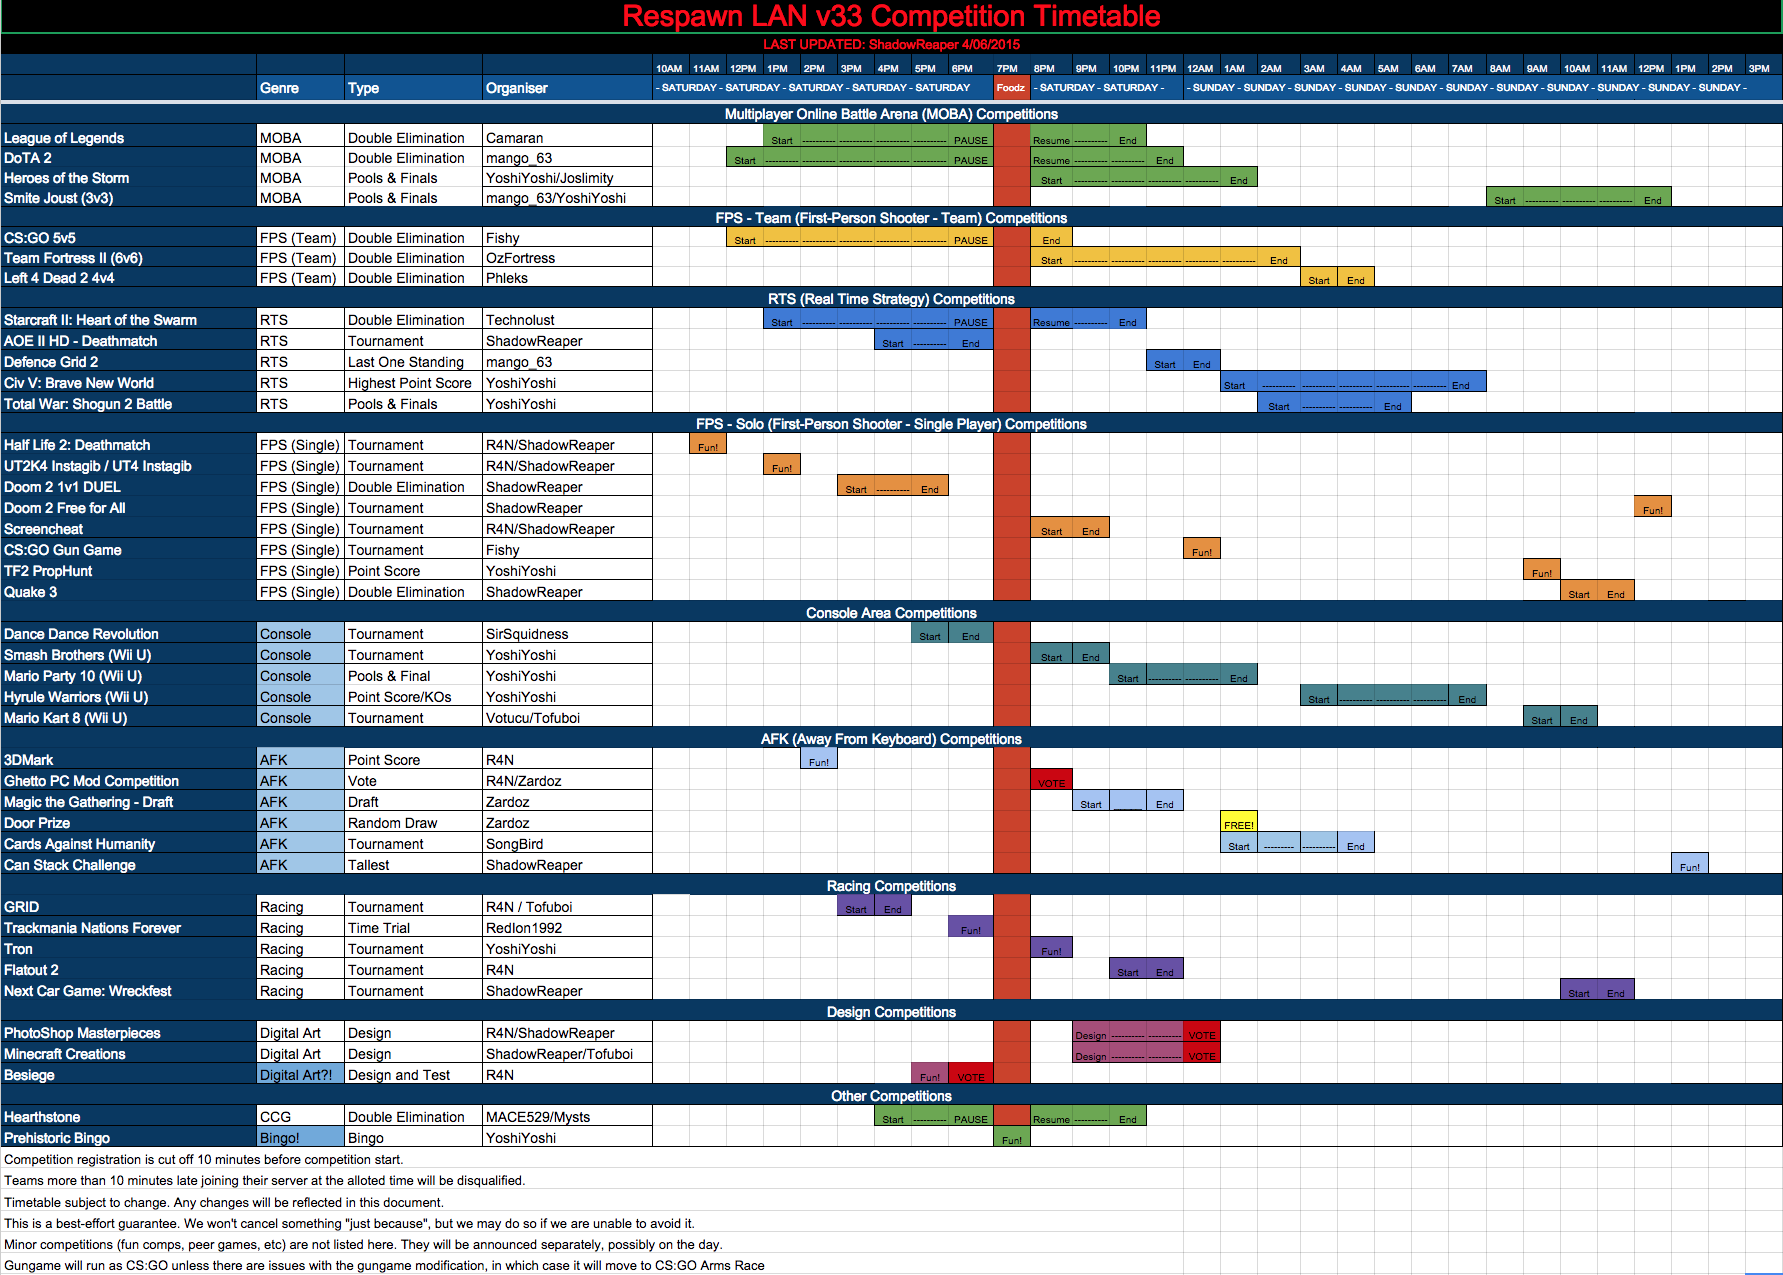 Respawn LAN v33 tournament timetable image